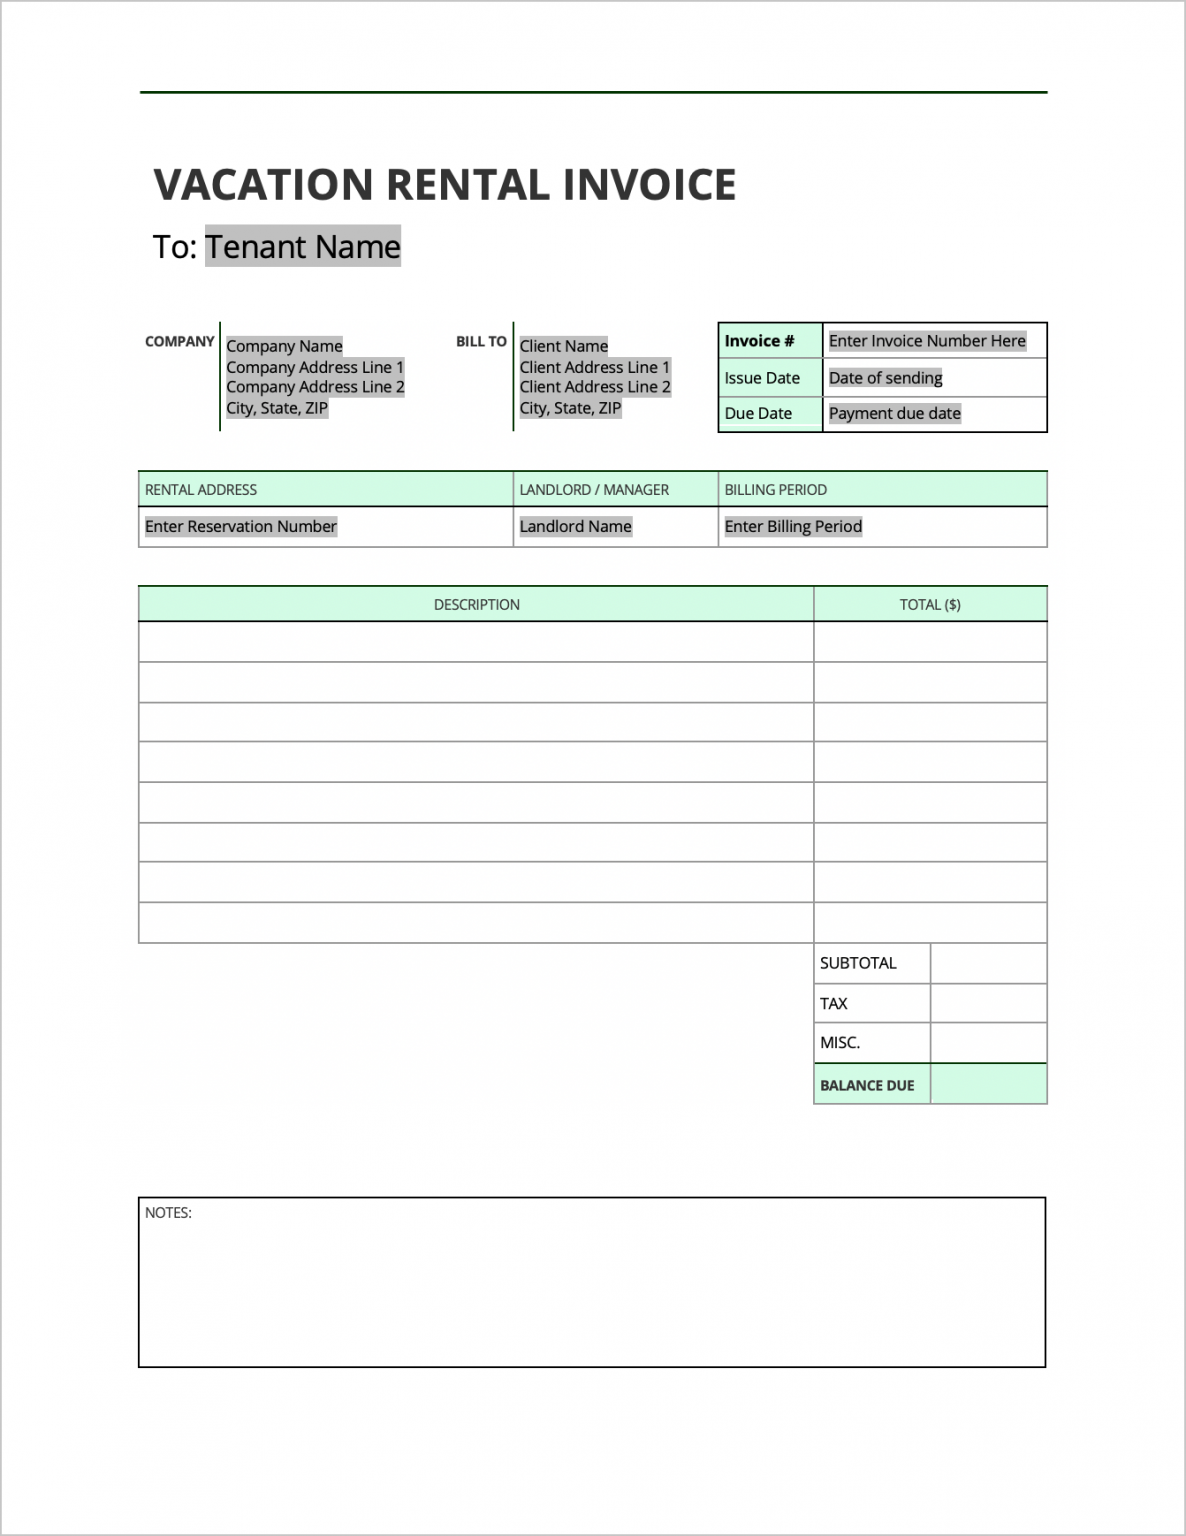 Free Rental Invoice Templates PDF WORD EXCEL